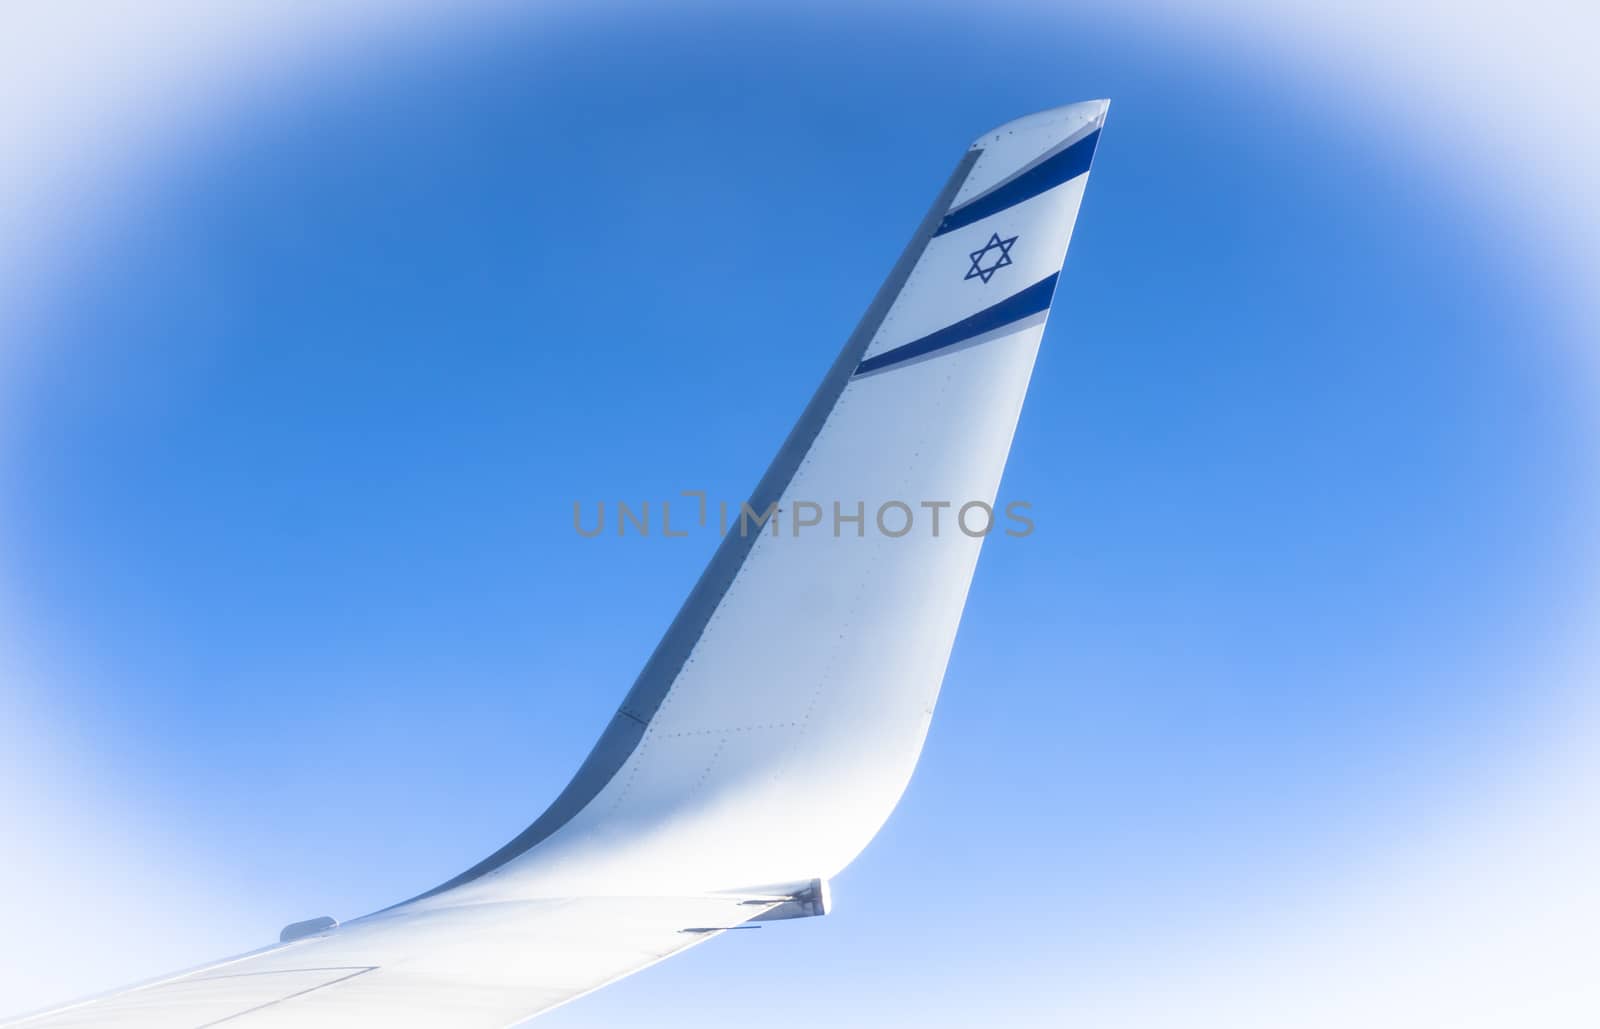 Israeli flag on plane wing on blue sky background